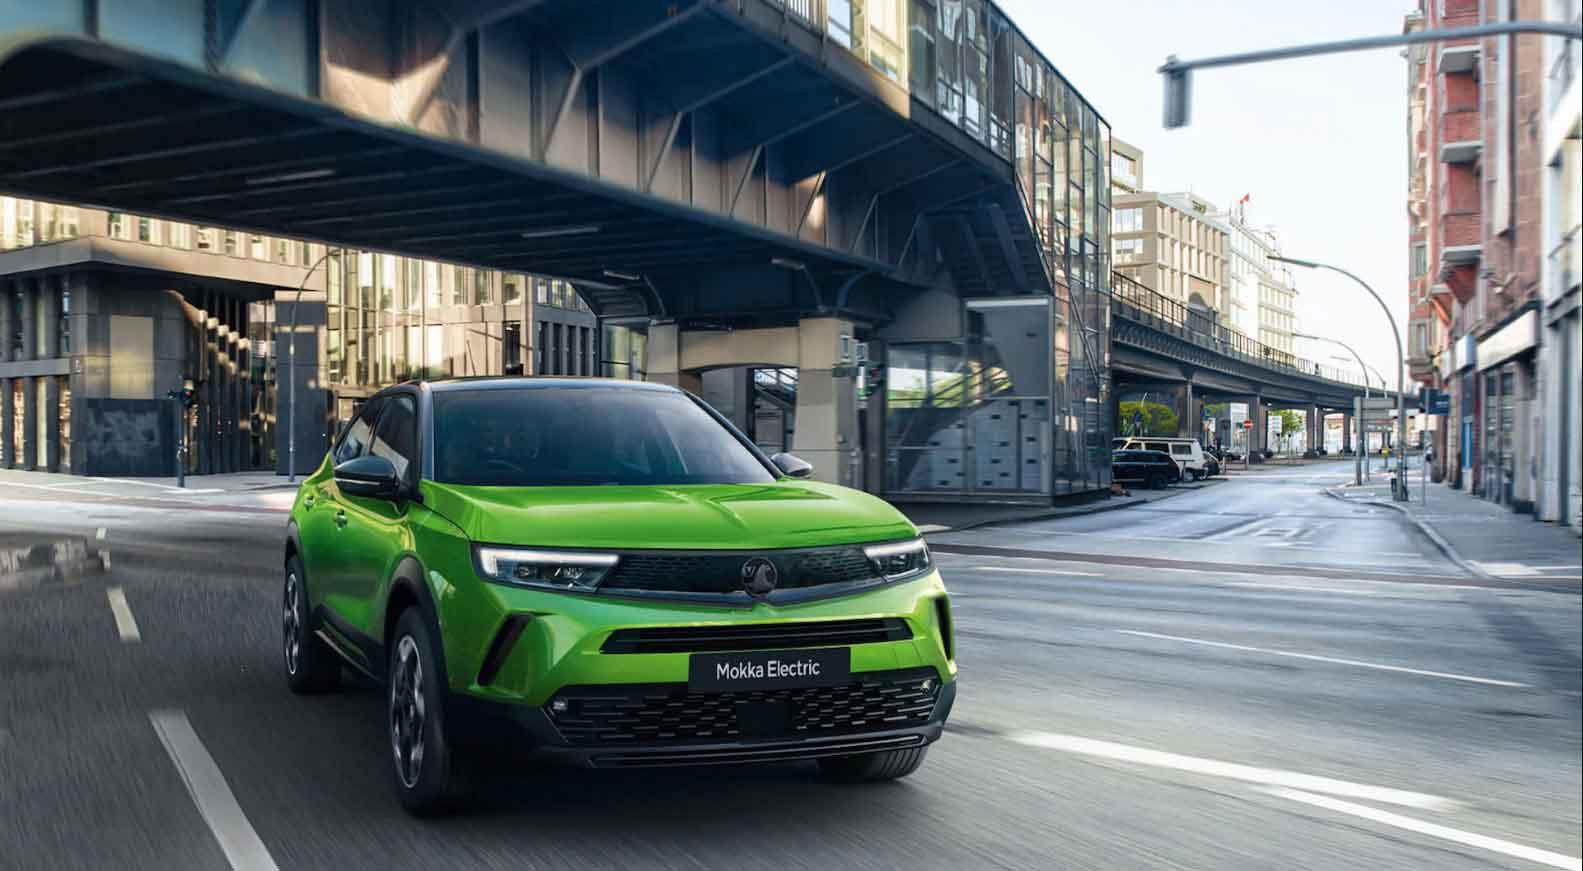 Green Vauxhall Mokka in a city road